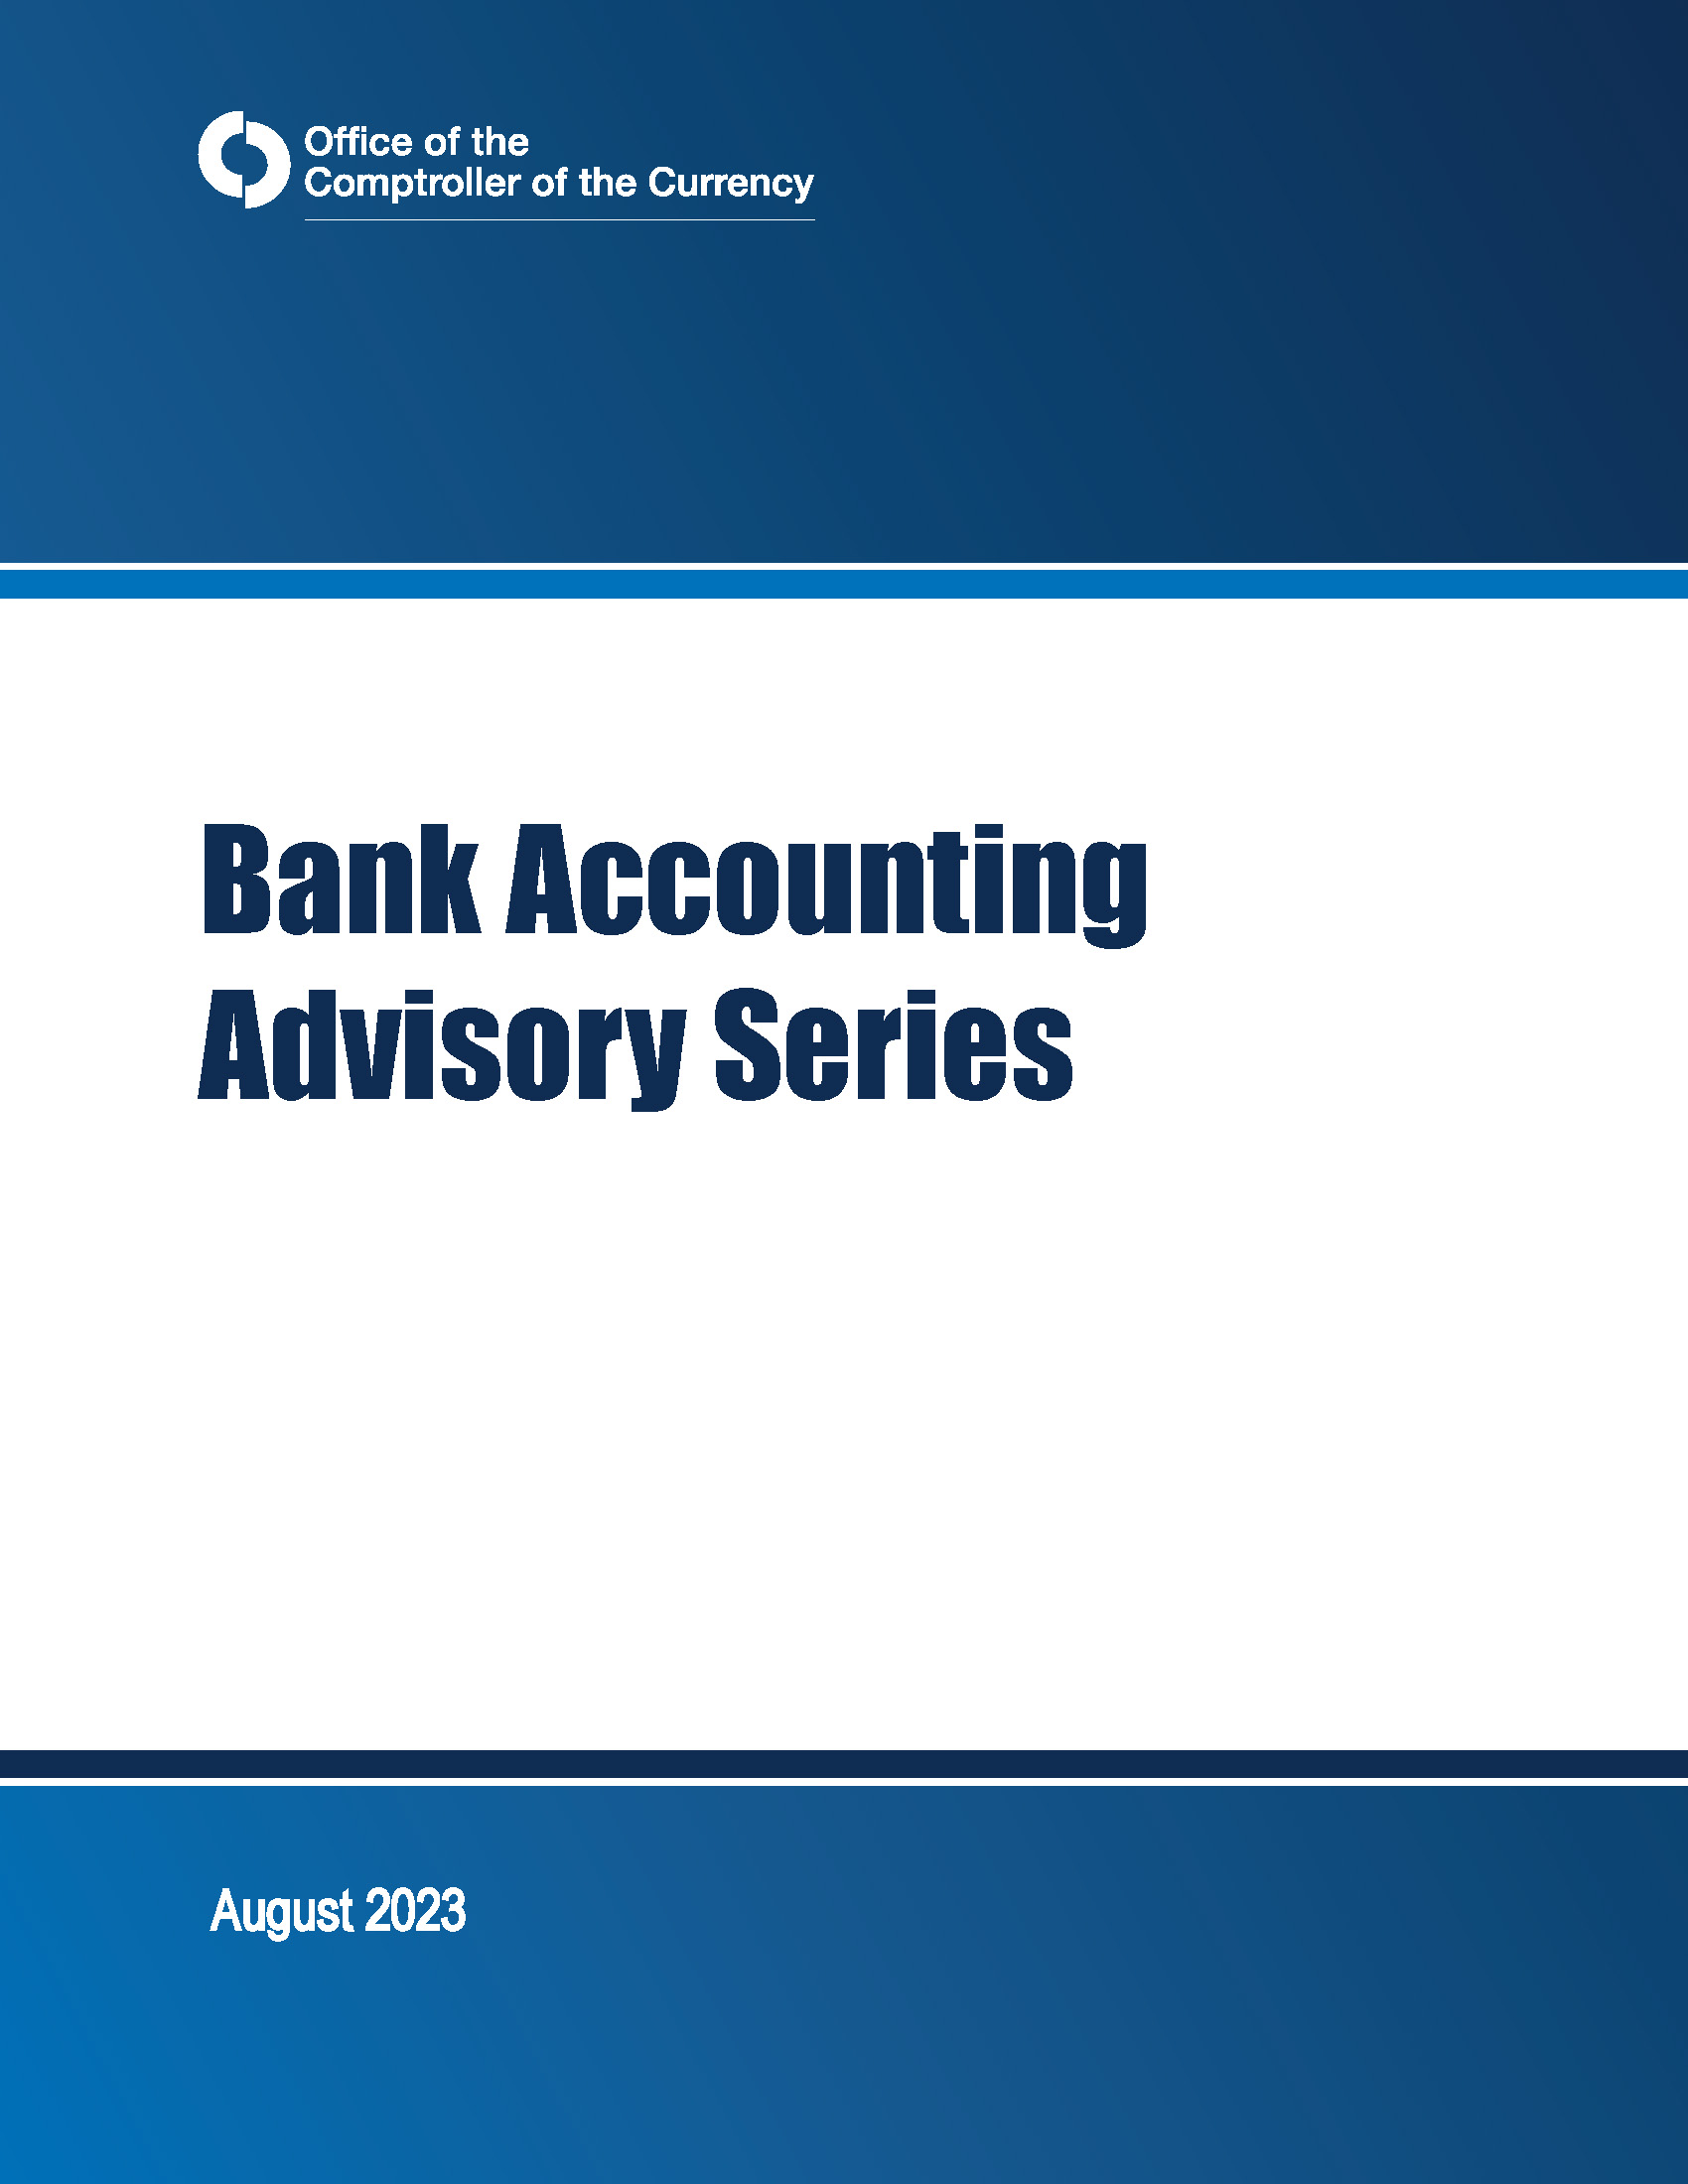 Bank Accounting Advisory Series Cover Image